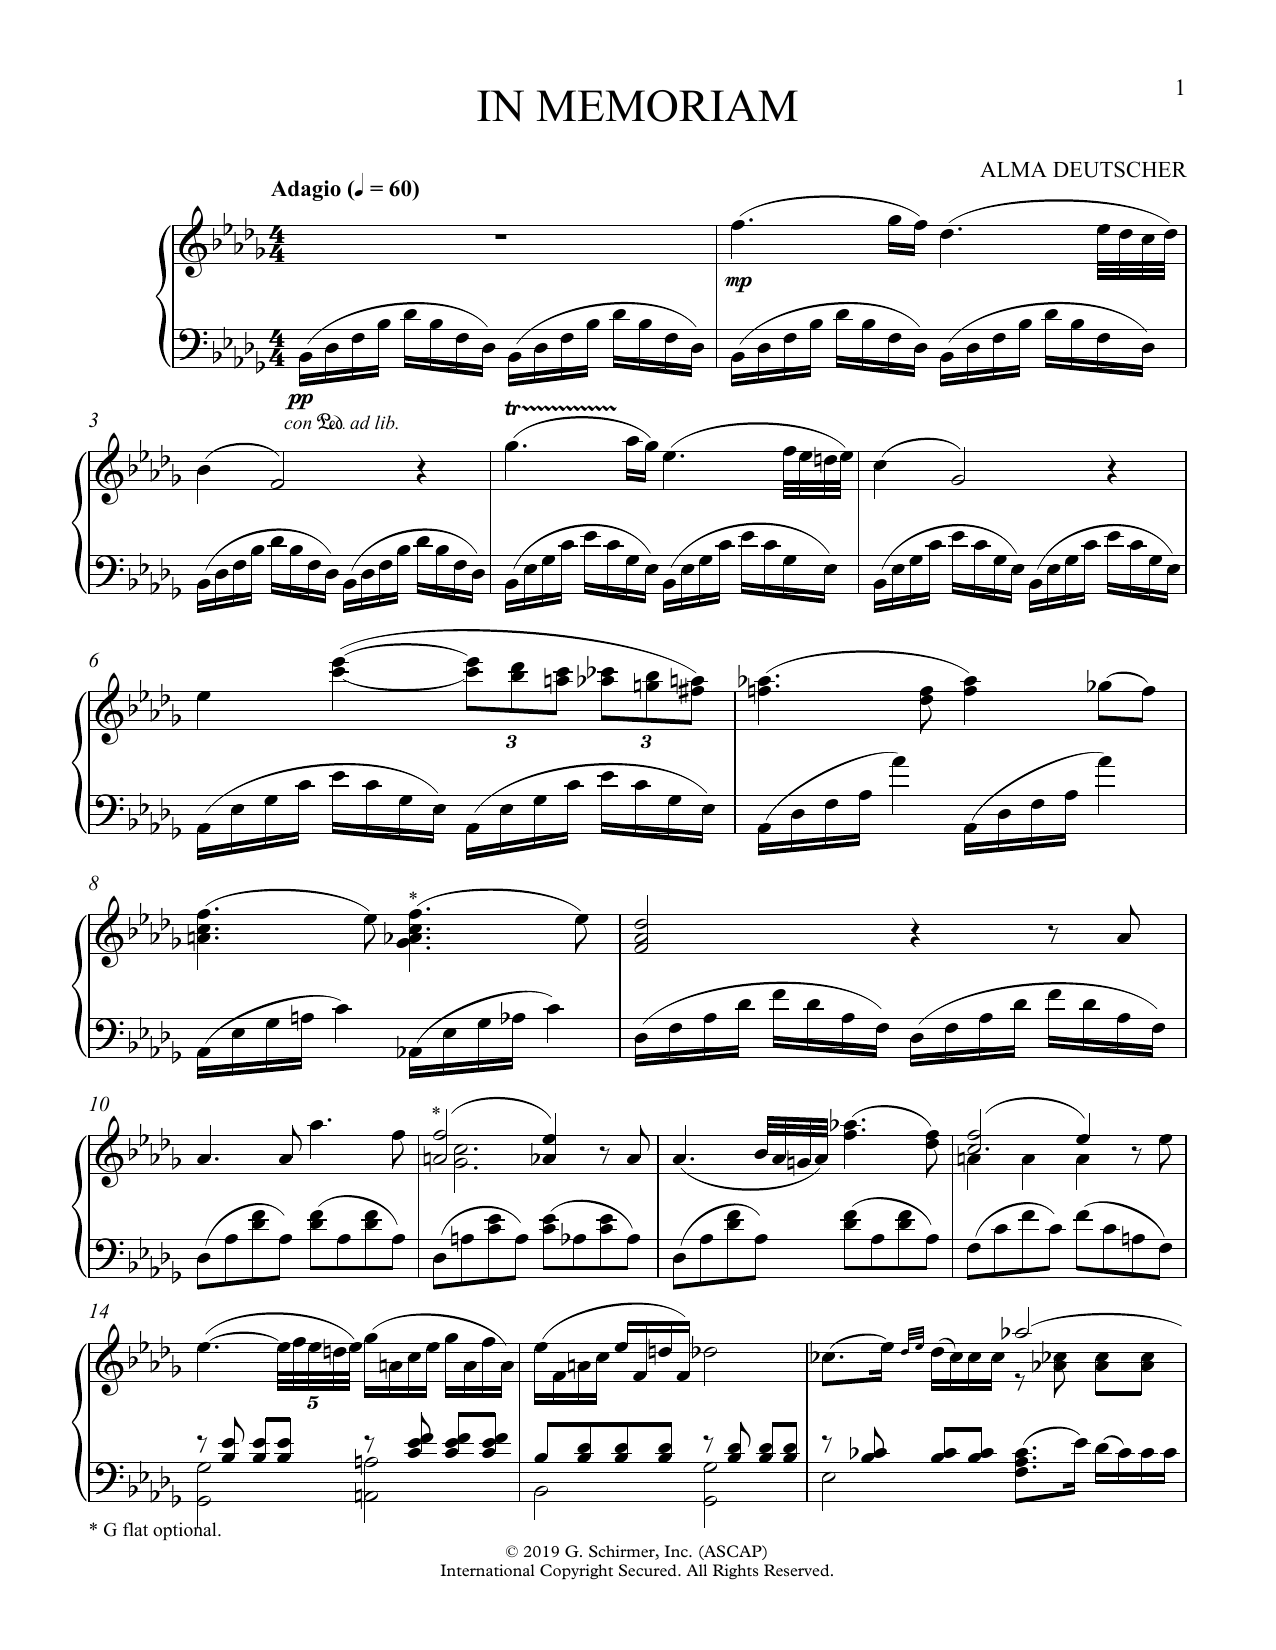 Alma Deutscher In Memoriam (Adagio from Piano Concerto) Sheet Music Notes & Chords for Piano Solo - Download or Print PDF